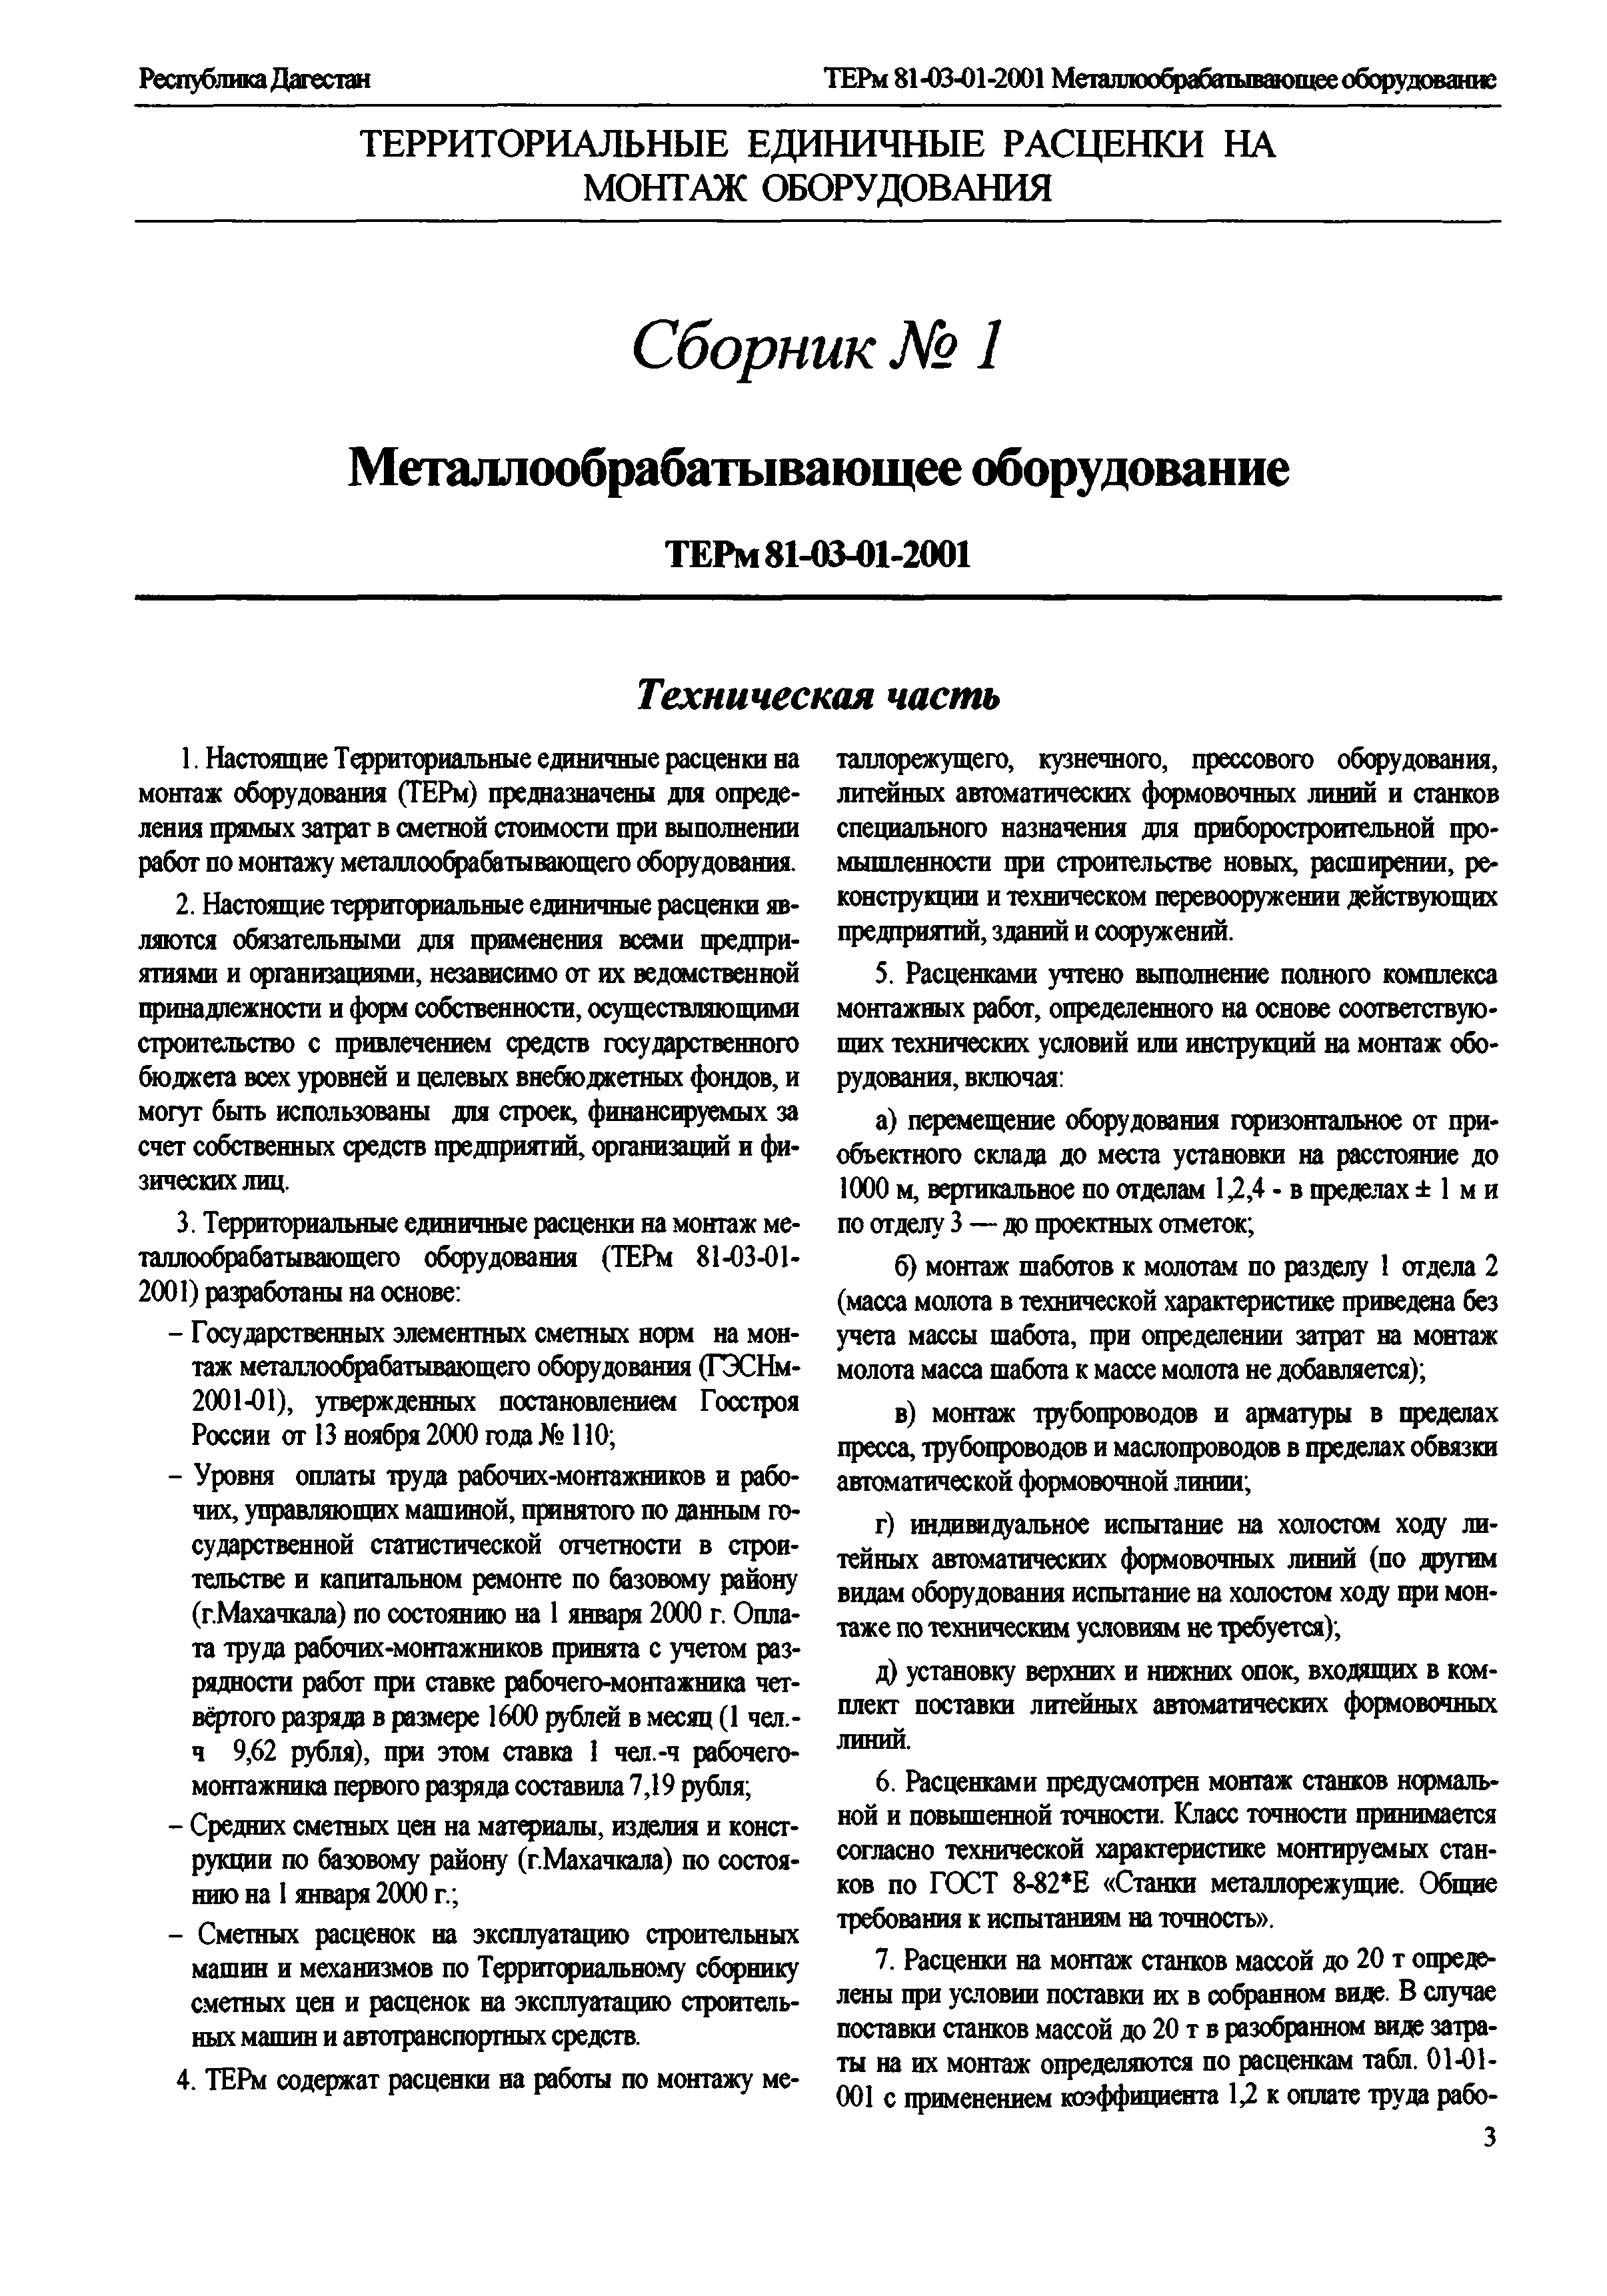 ТЕРм Республика Дагестан 2001-01